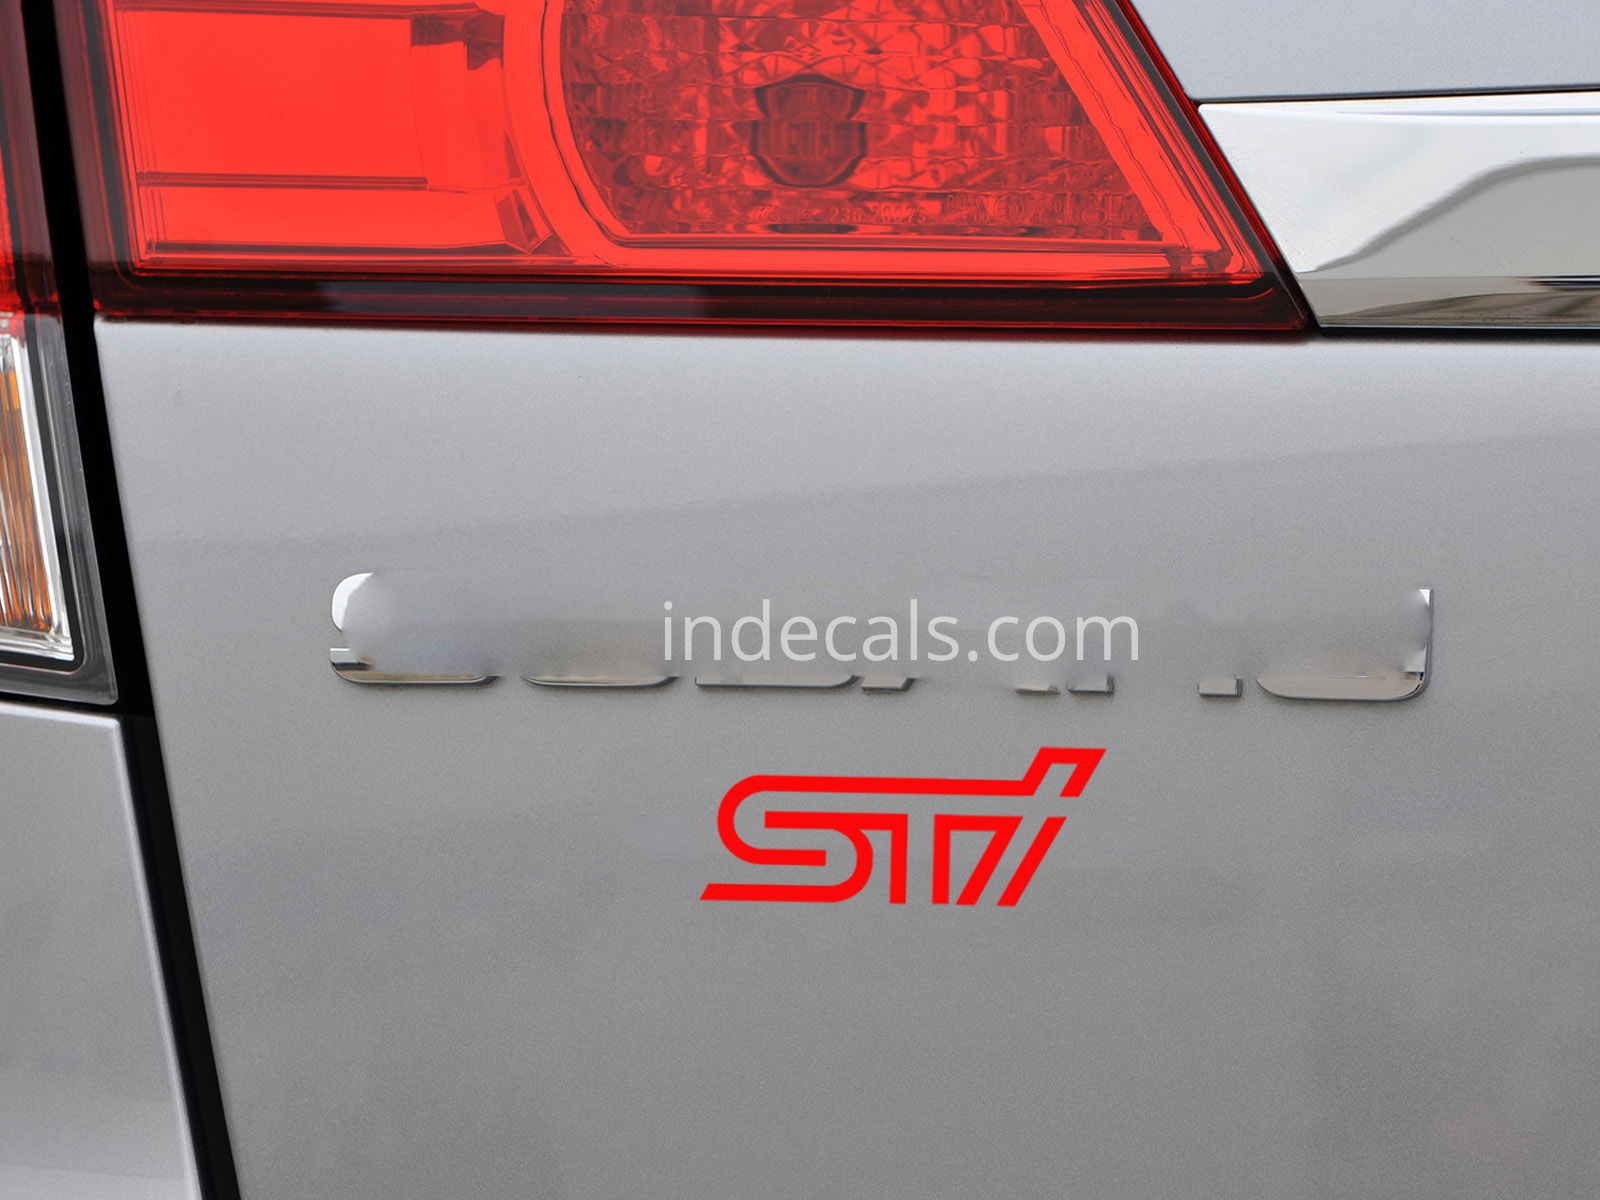 2 x Subaru STI stickers for Trunk - Red